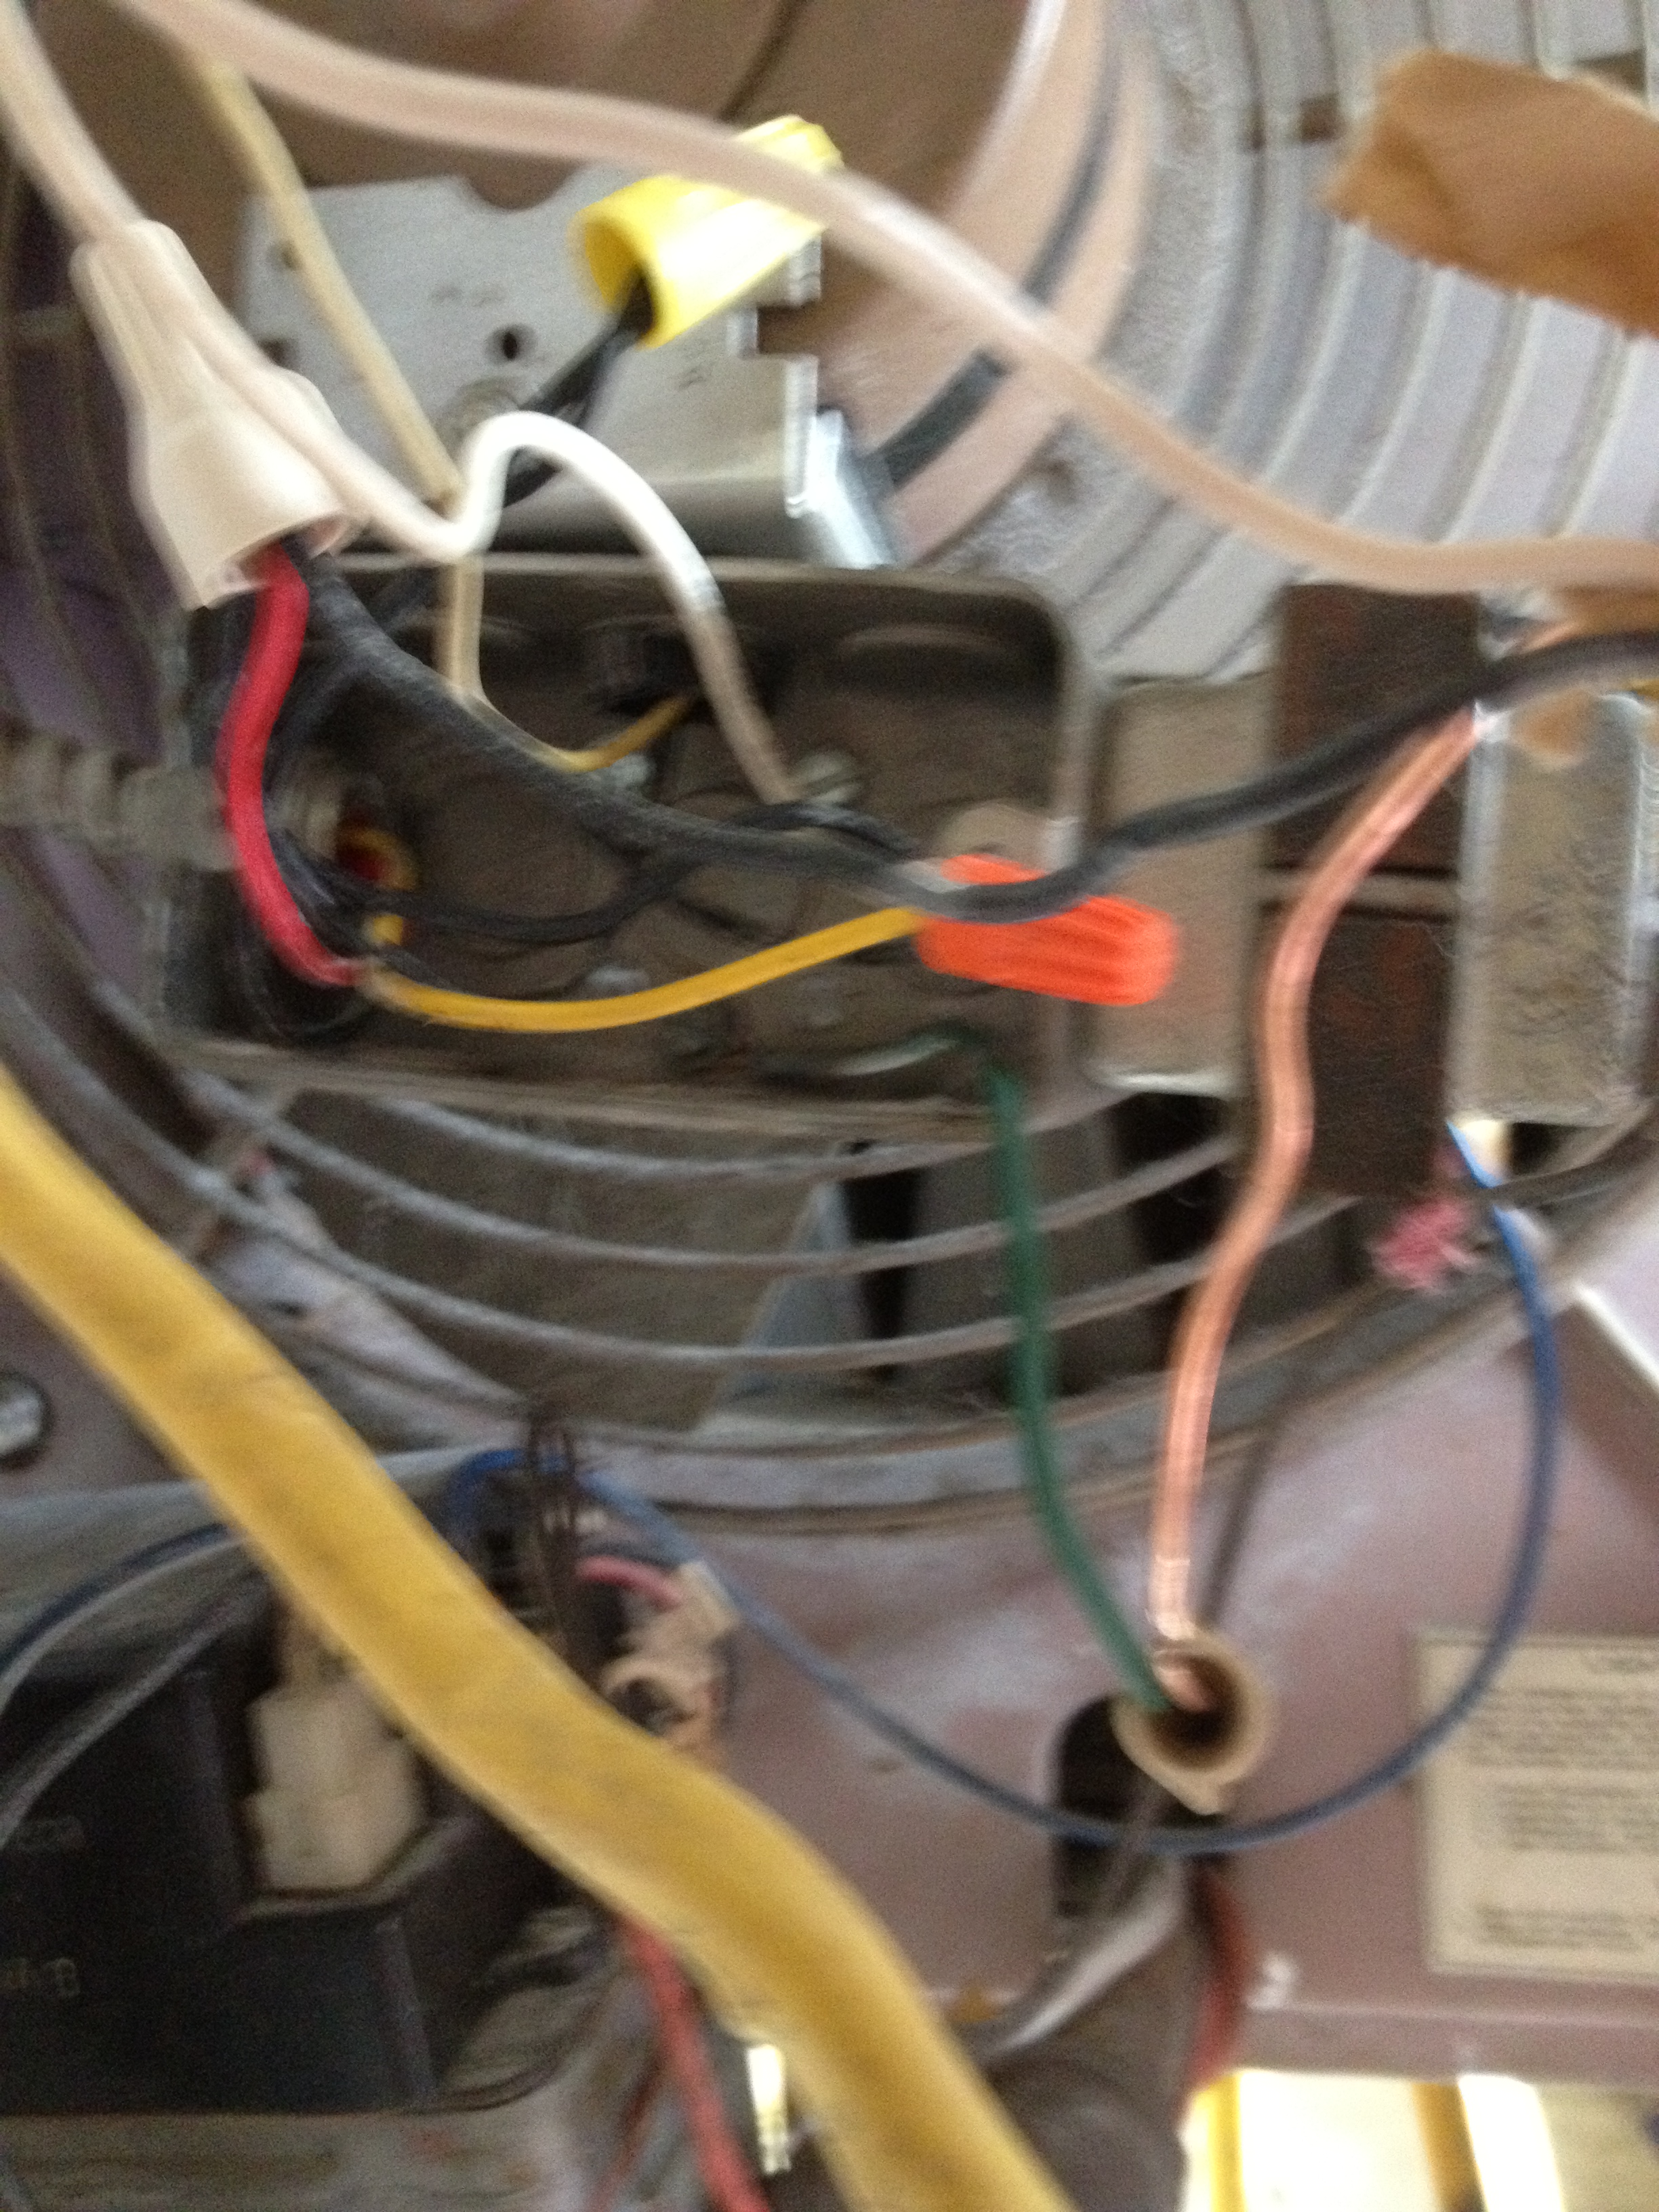 reznor furnace wiring diagram